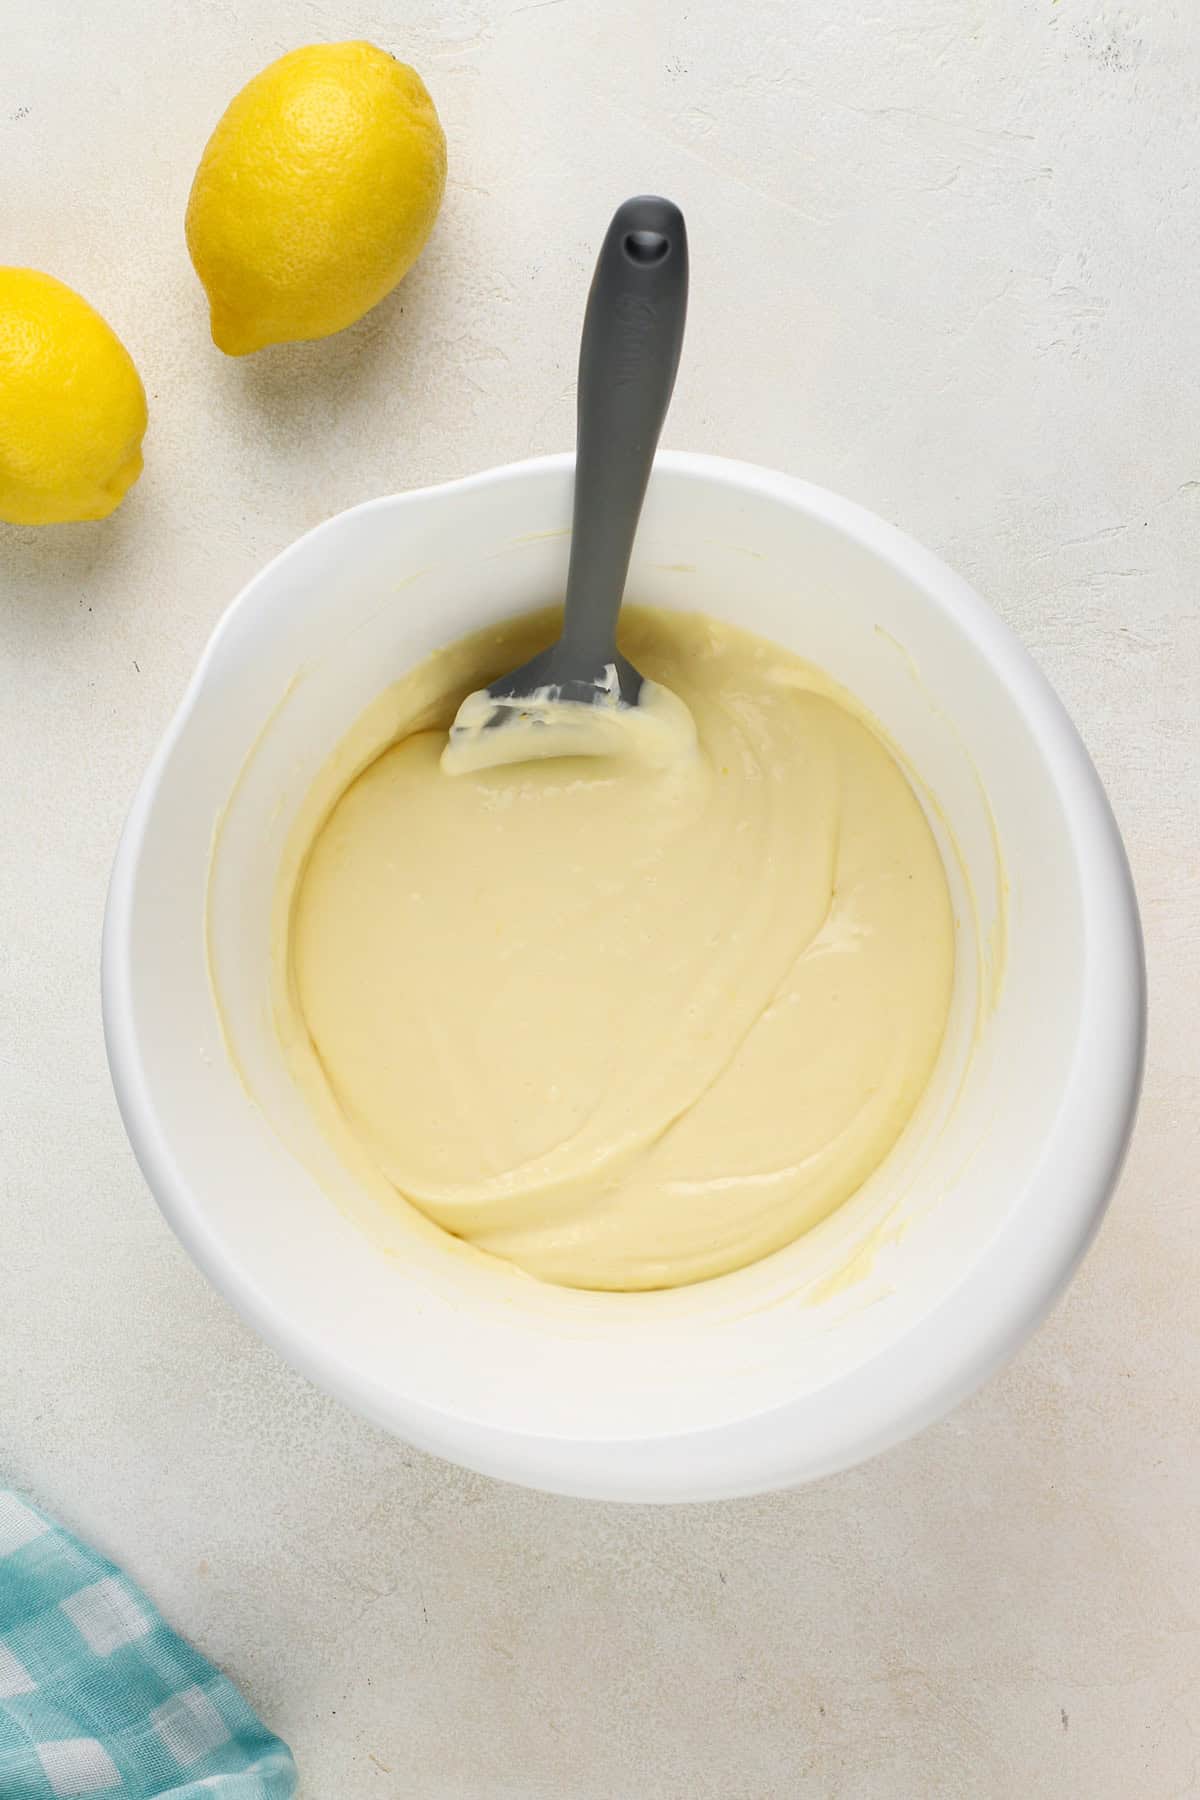 Mini lemon cheesecake filling in a white mixing bowl.